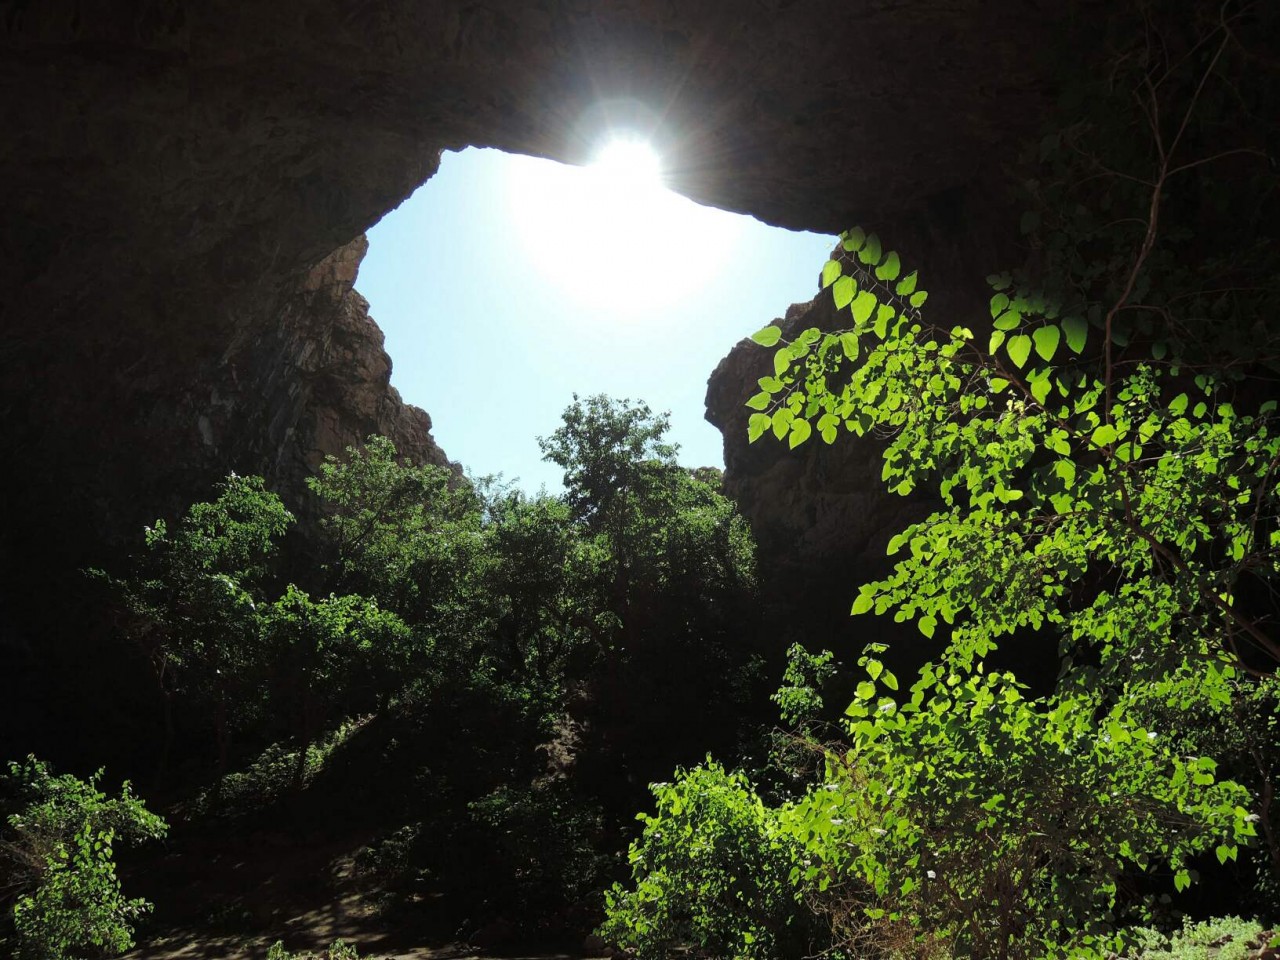 Ak Mechet paradise cave